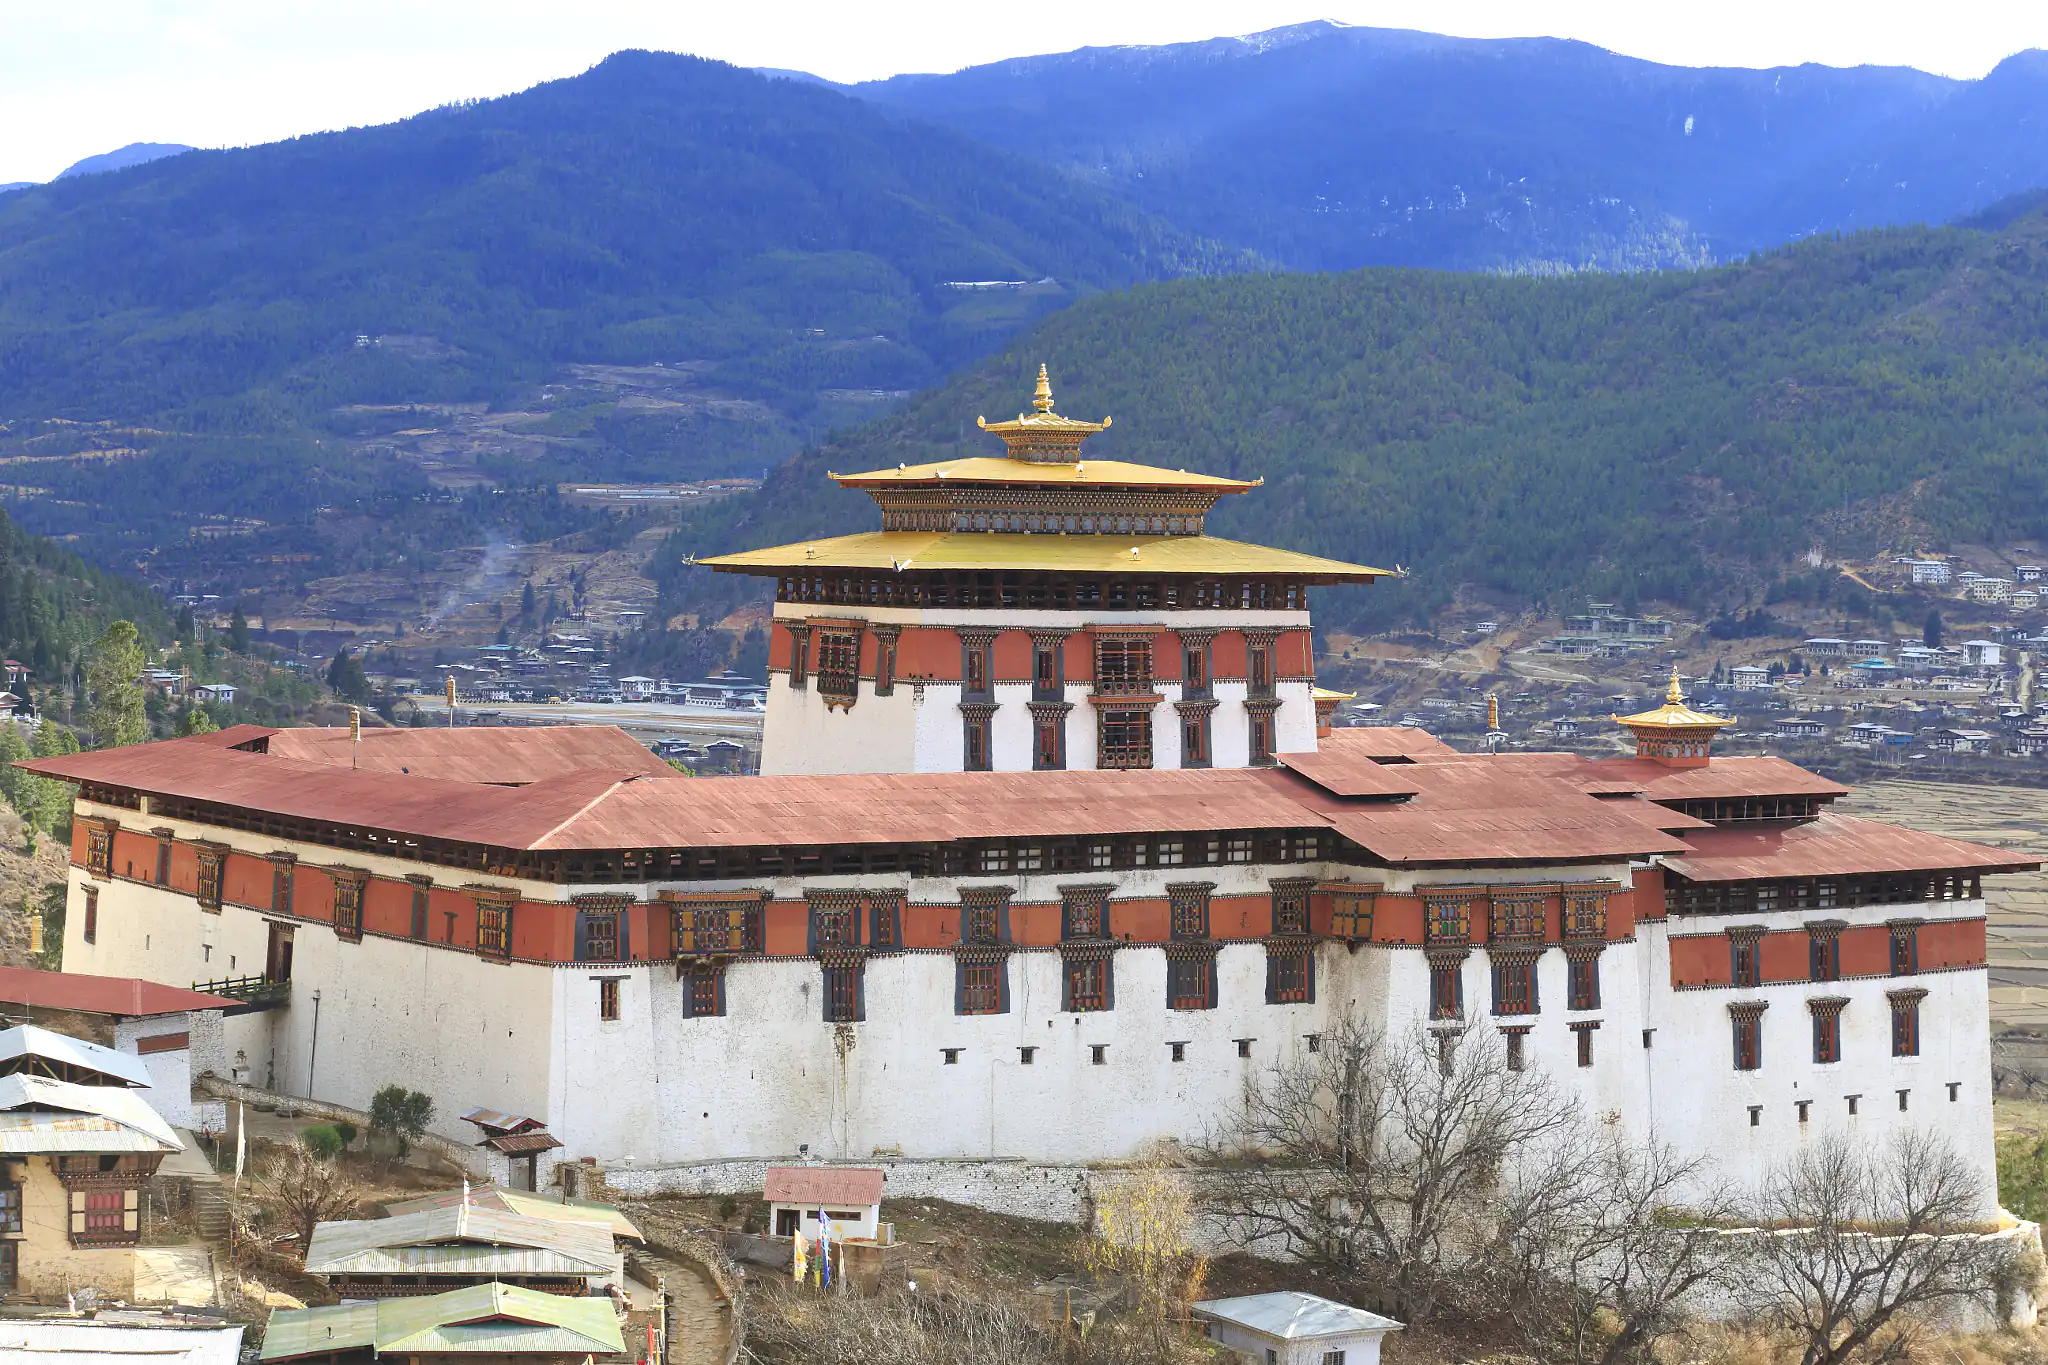 Rinpung Dzong or Paro Dzong